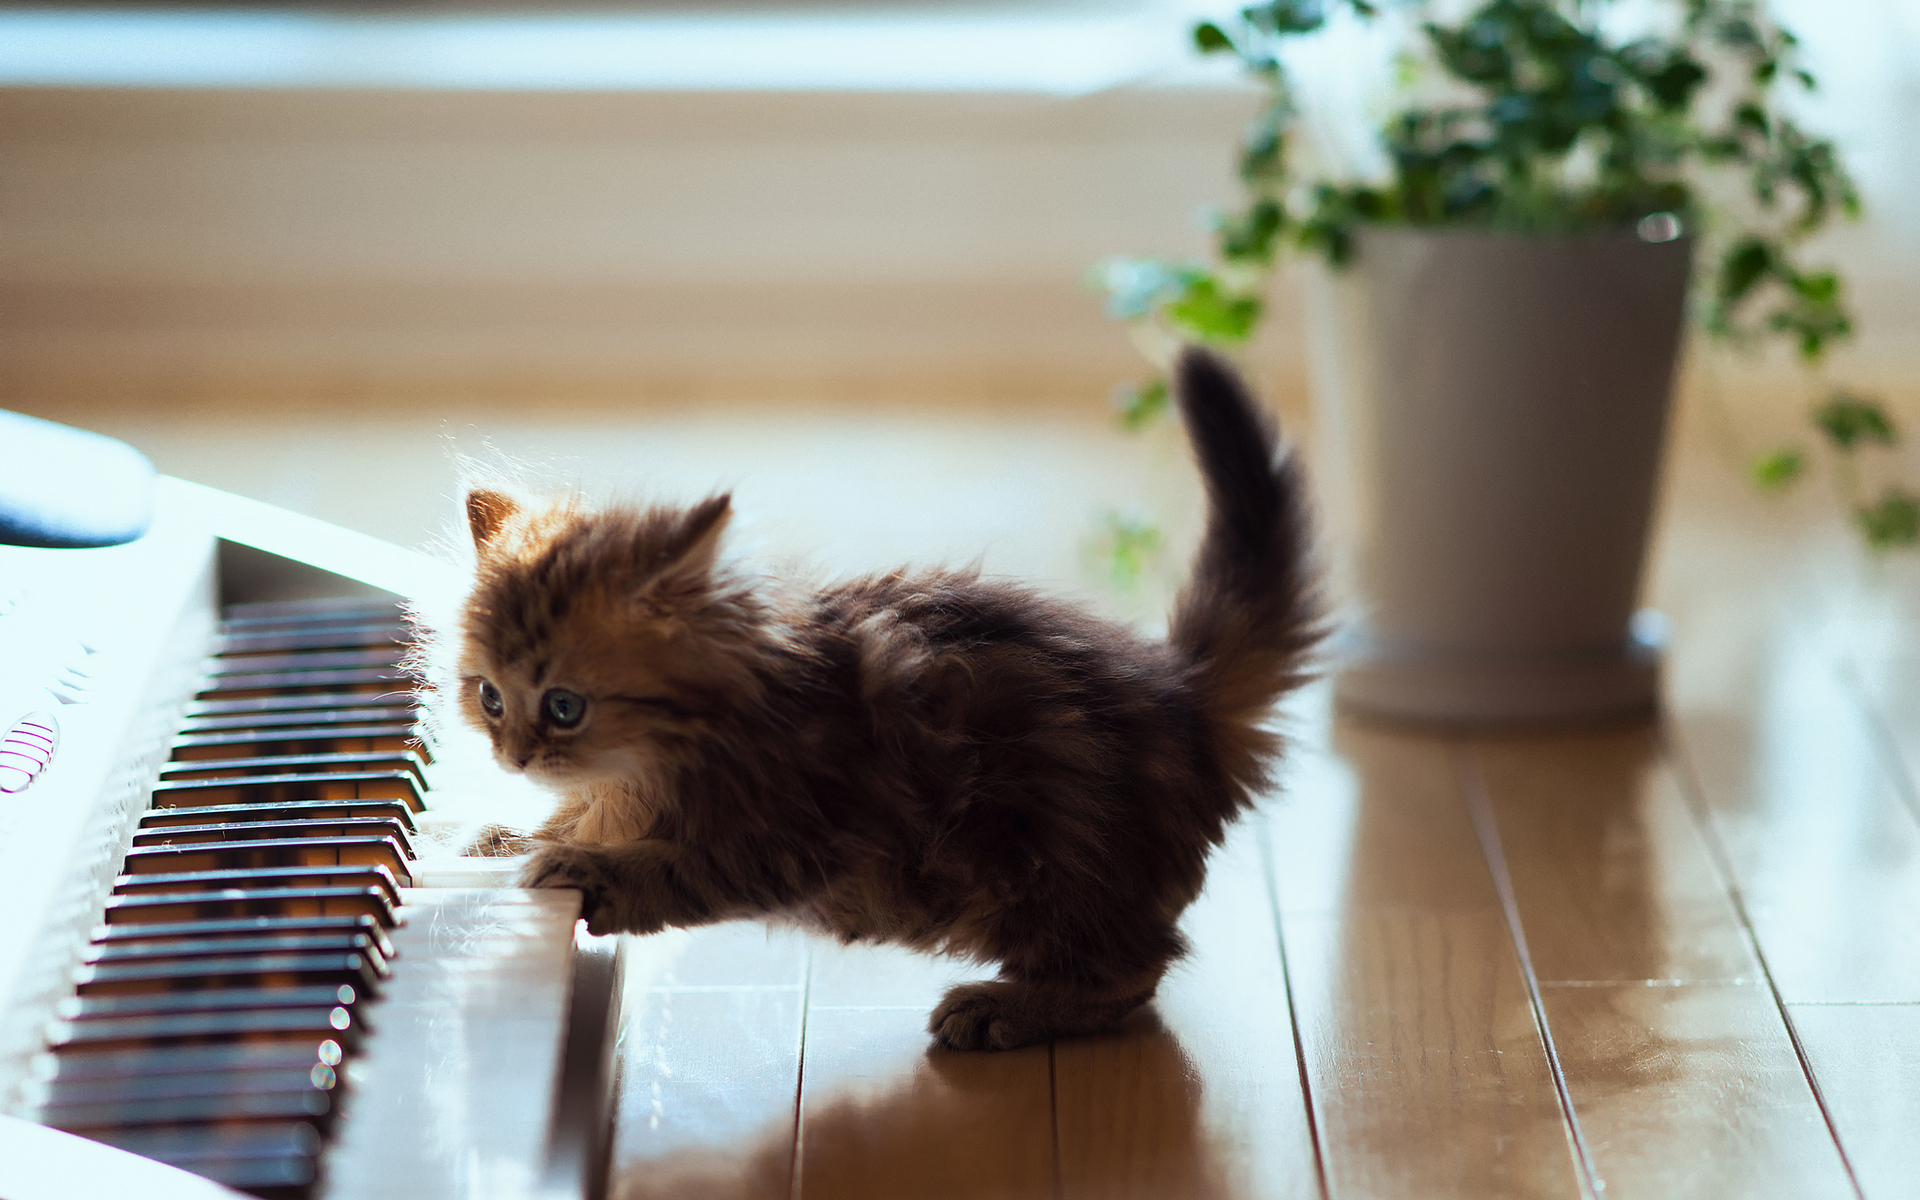 Cute-Kitten-Playing-Piano.jpg 1,920×1,200 pixels | cuddelies ...